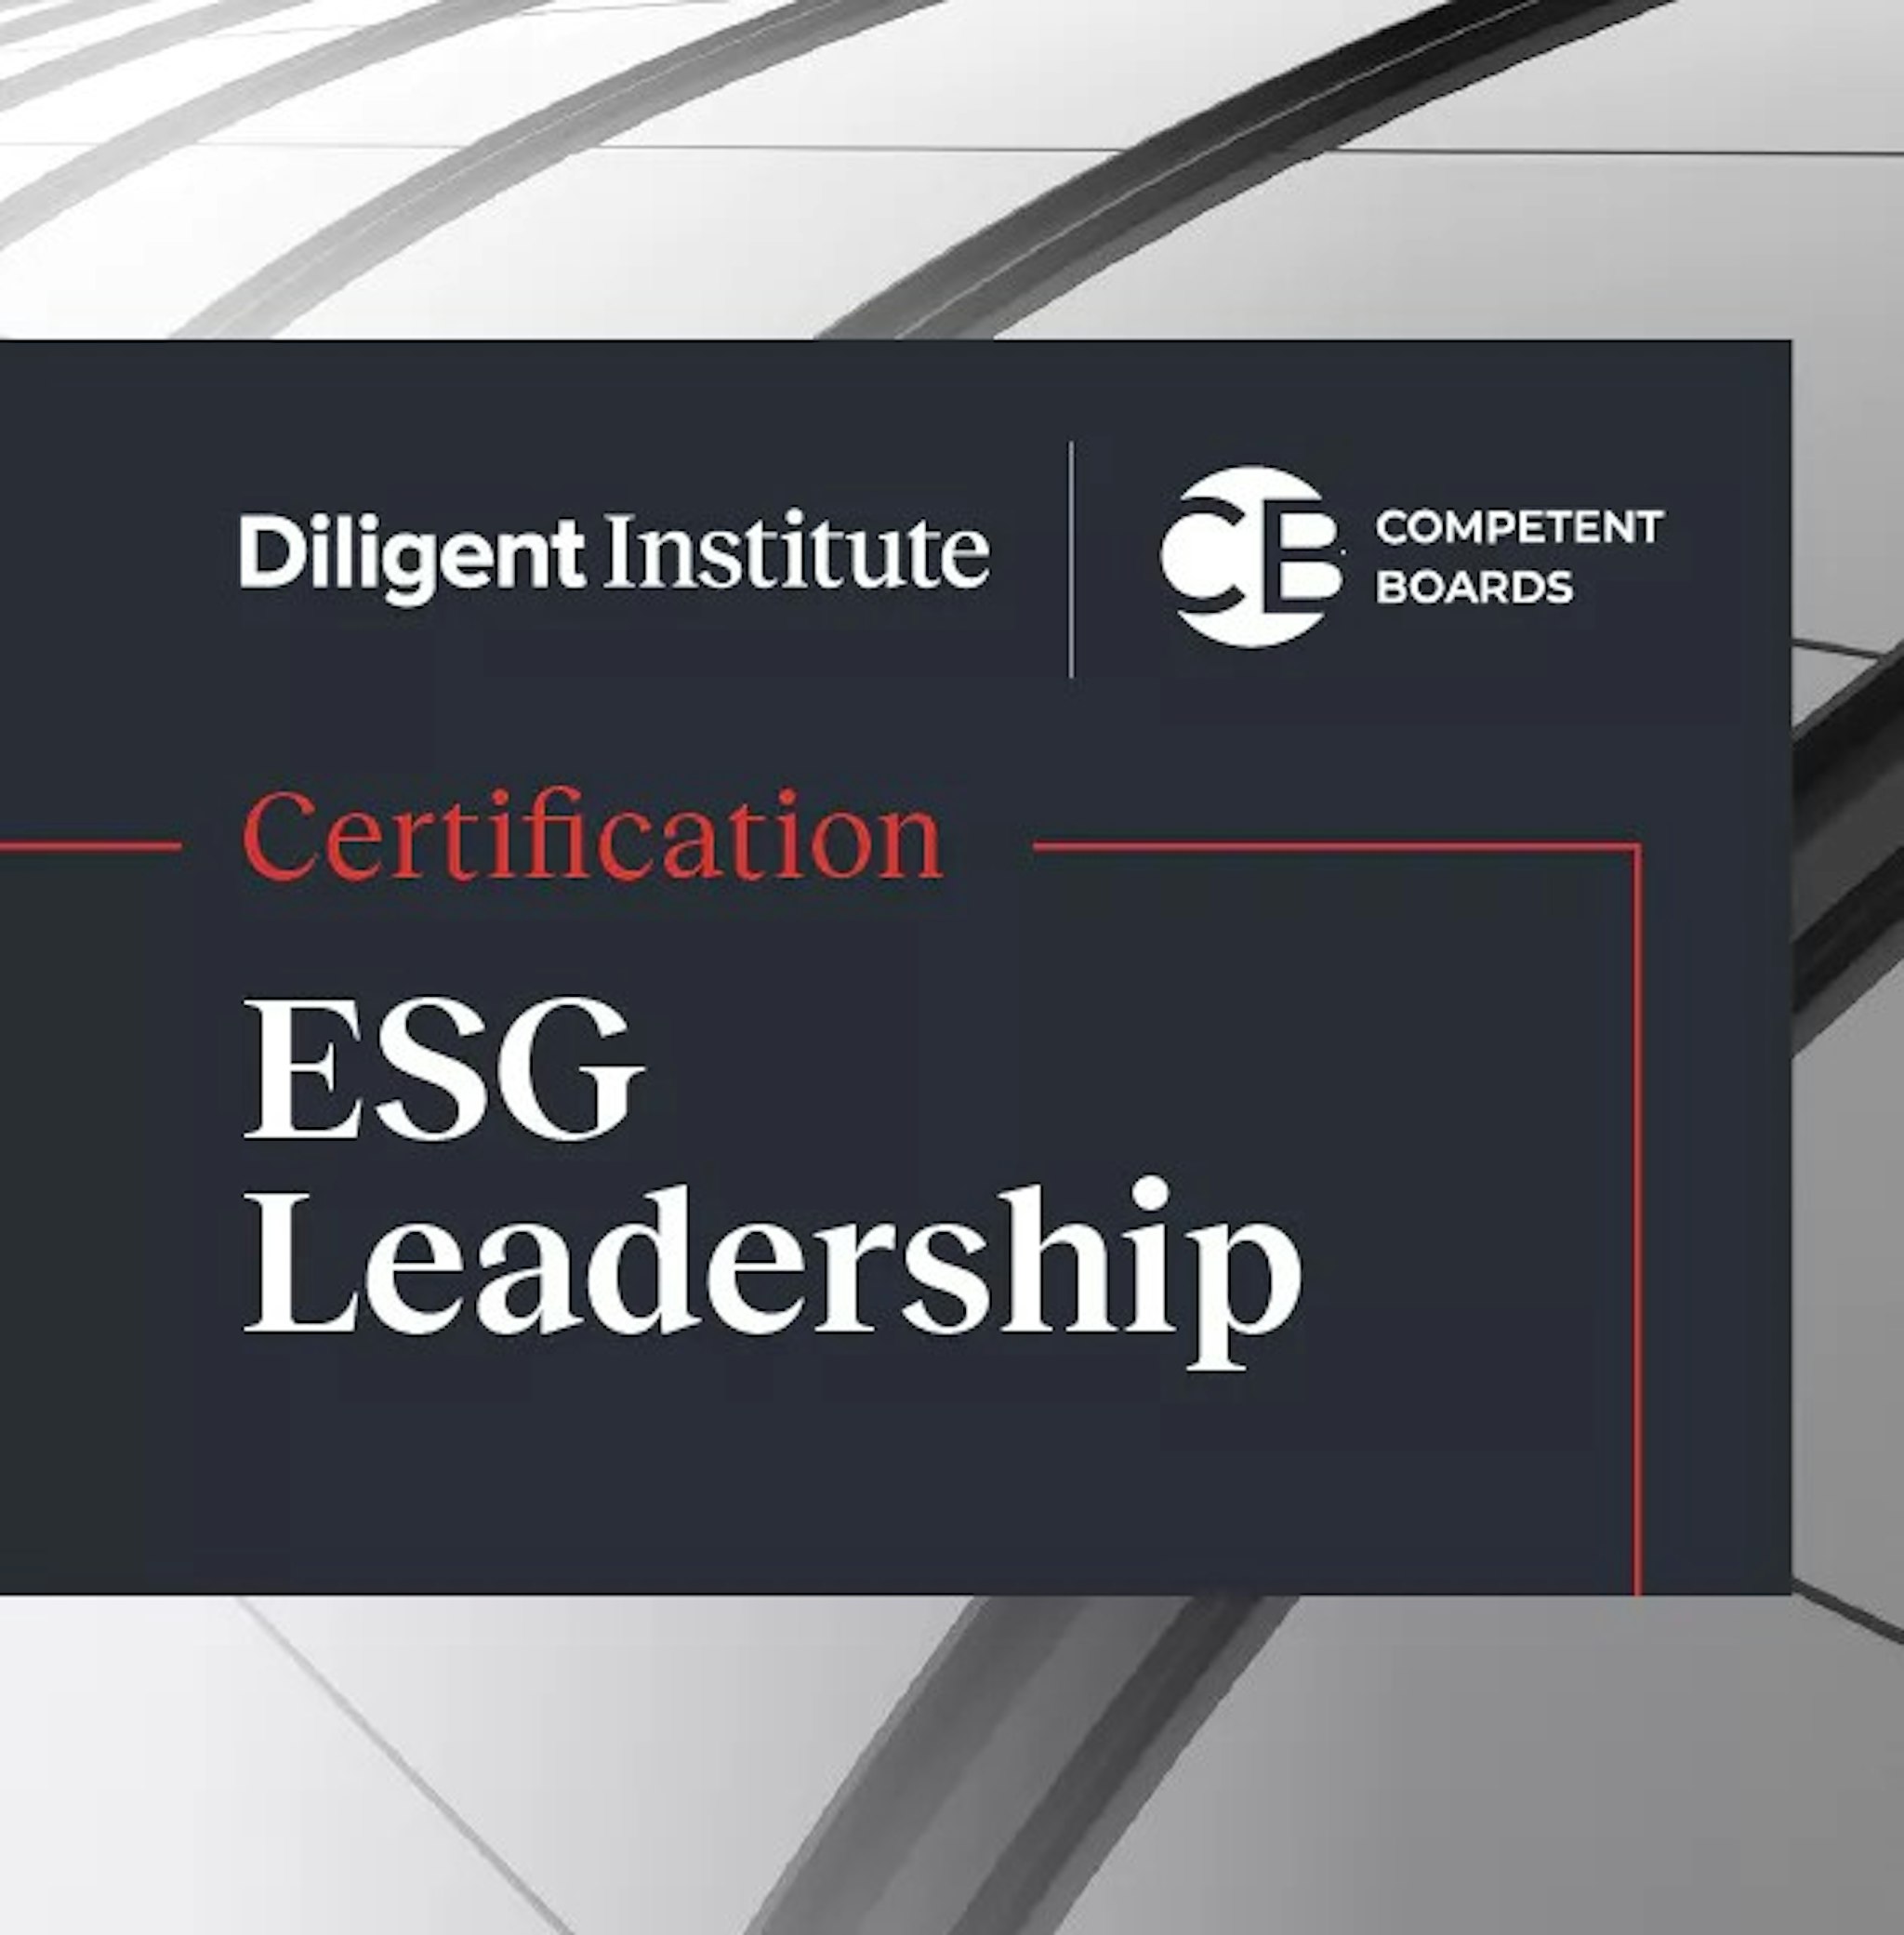 ESG LEADERSHIP CERTIFICATE PROGRAM